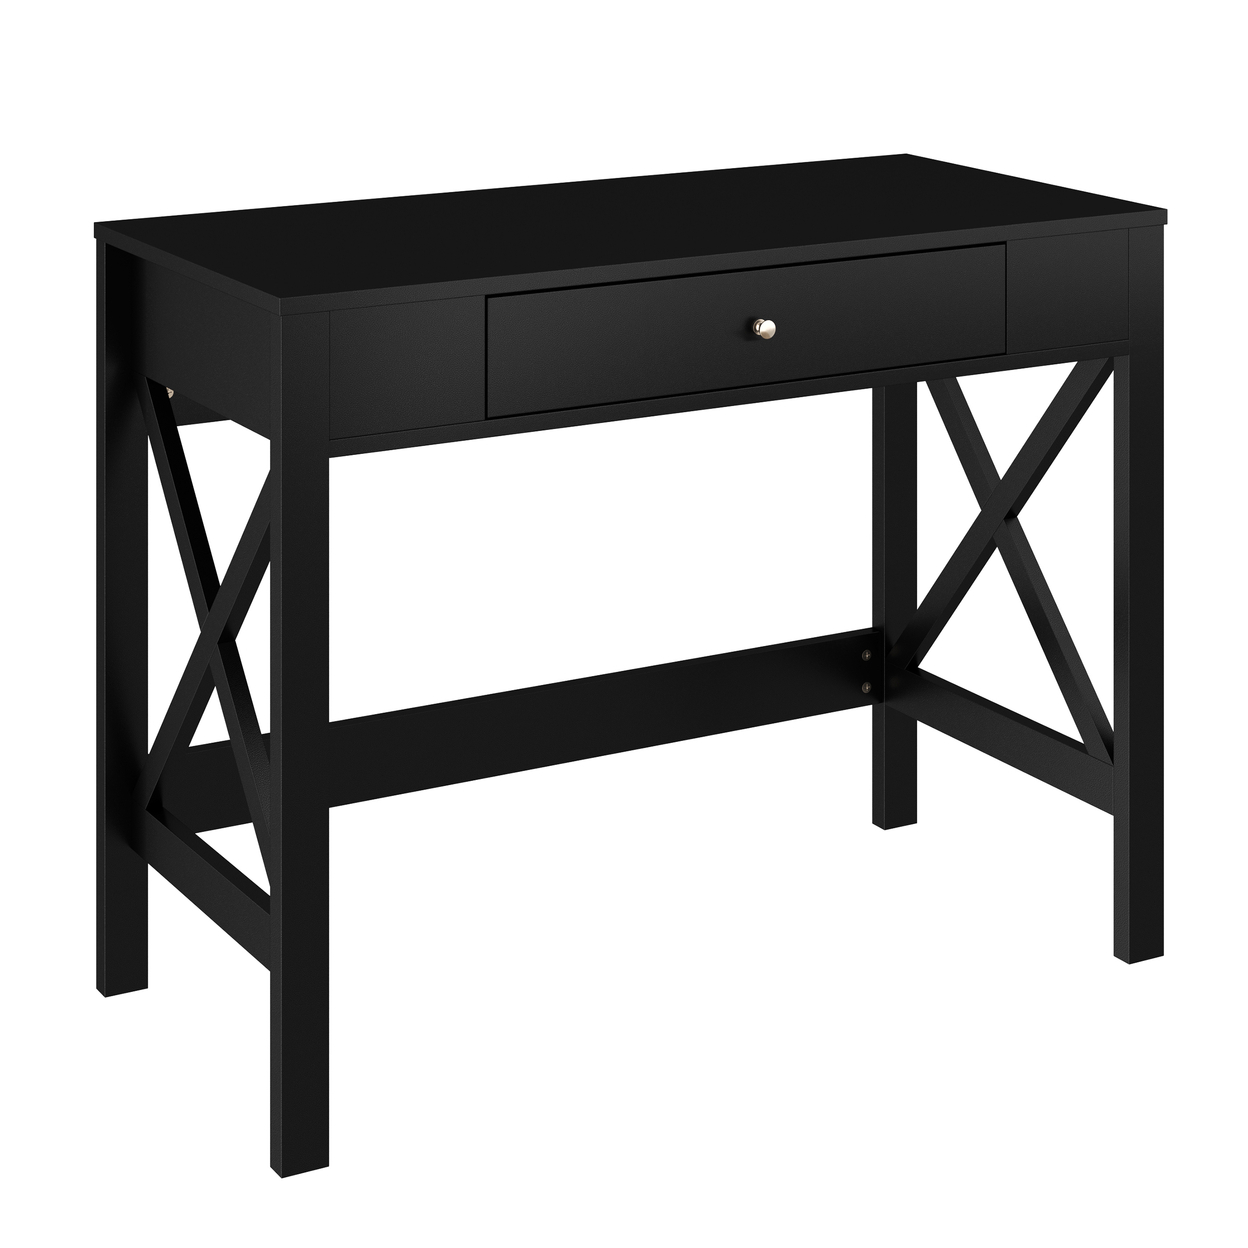 Writing Desk Modern Desk With X-Pattern Legs And Drawer Storage, Black